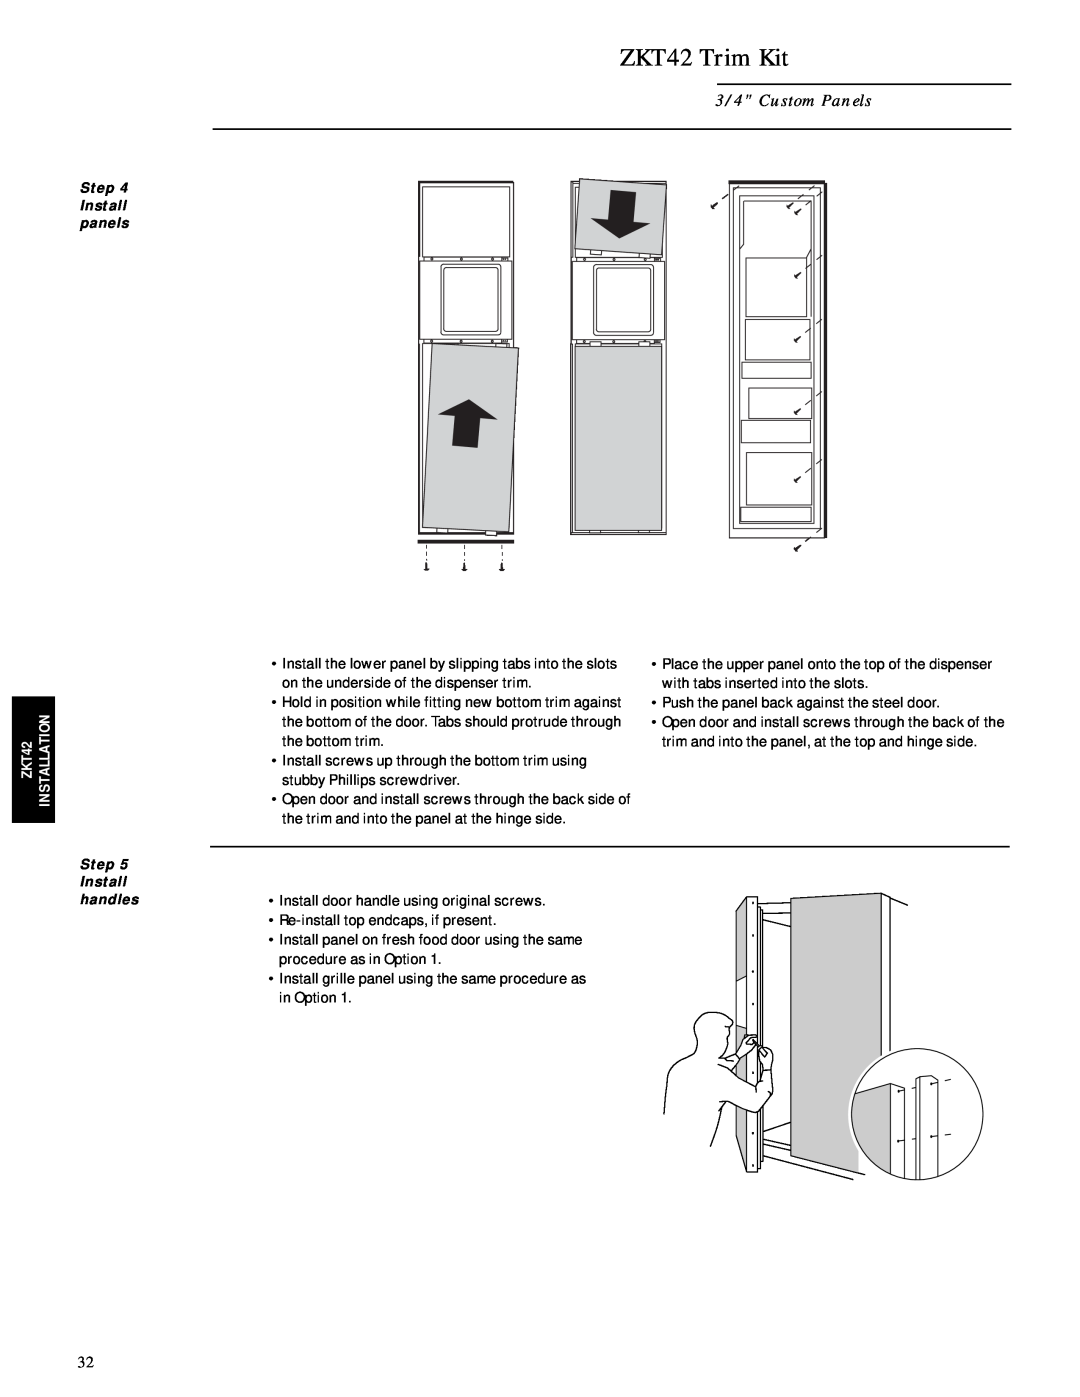 GE Monogram ZISW42D, ZIS42N, ZISB42D ZKT42 Trim Kit, 3/4 Custom Panels, Push the panel back against the steel door 